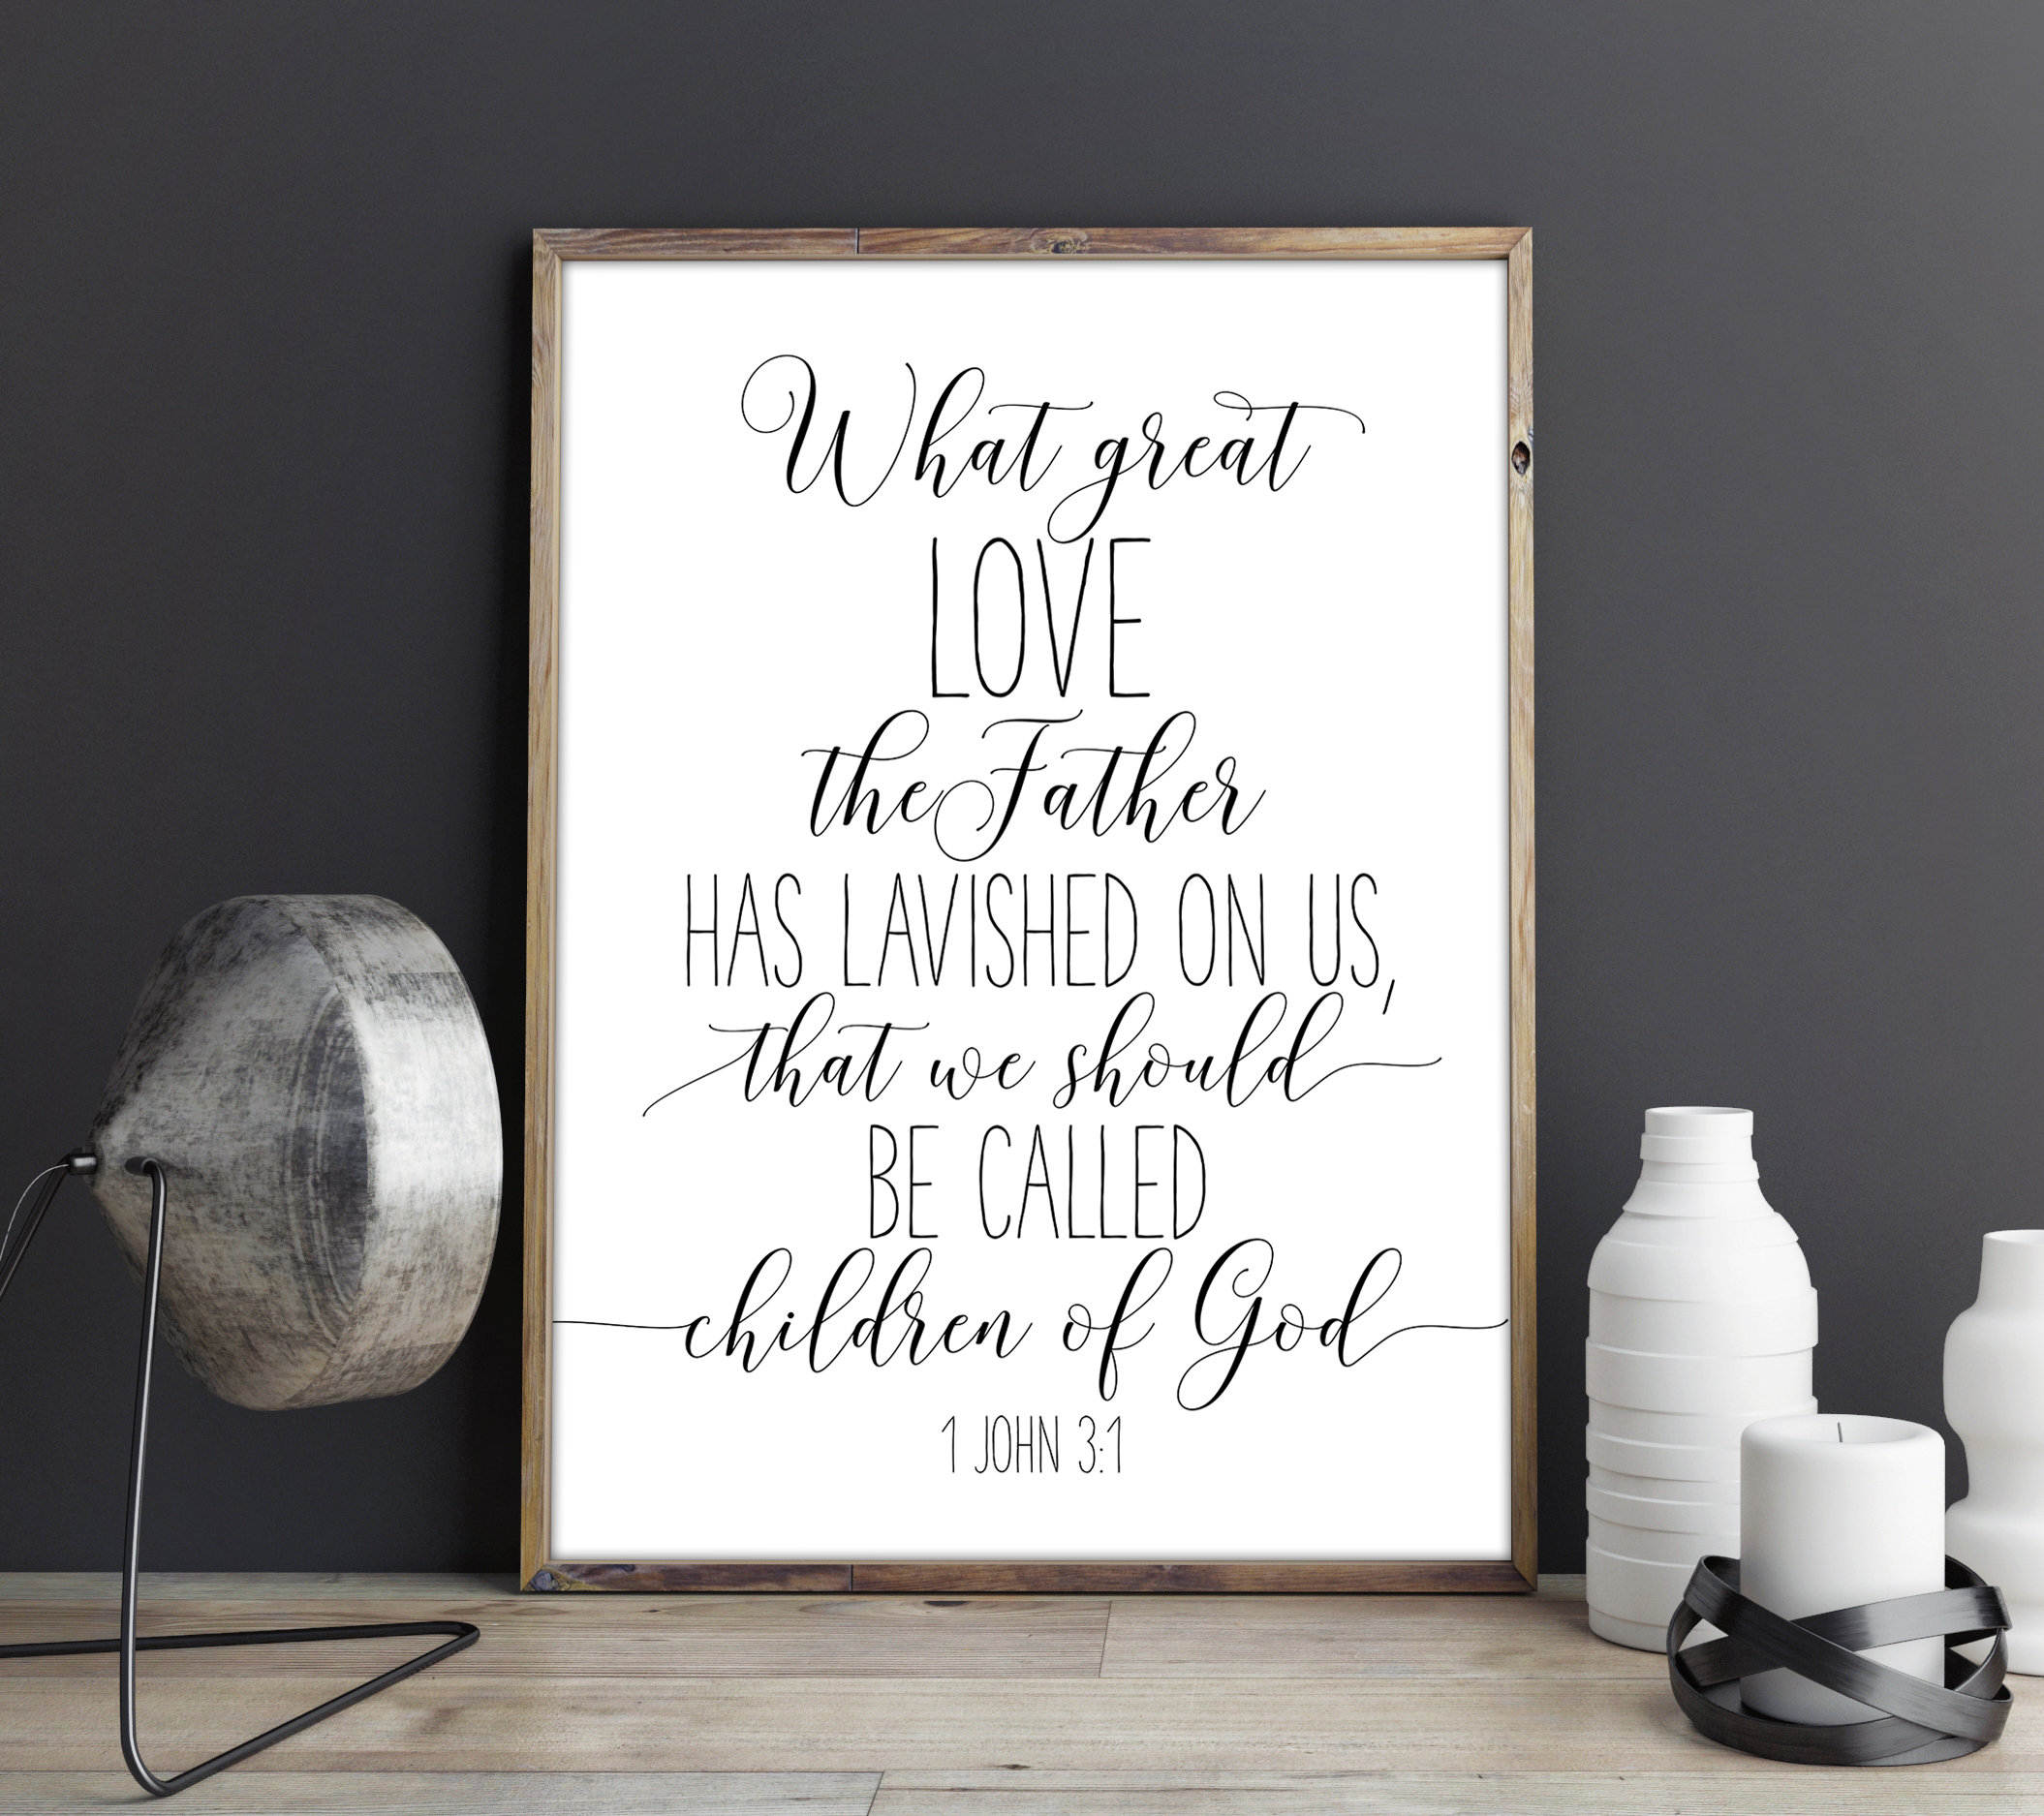 We Should Be Called Children Of God, 1 John 3:1, Bible Verse Printable Wall Art, Nursery Decor